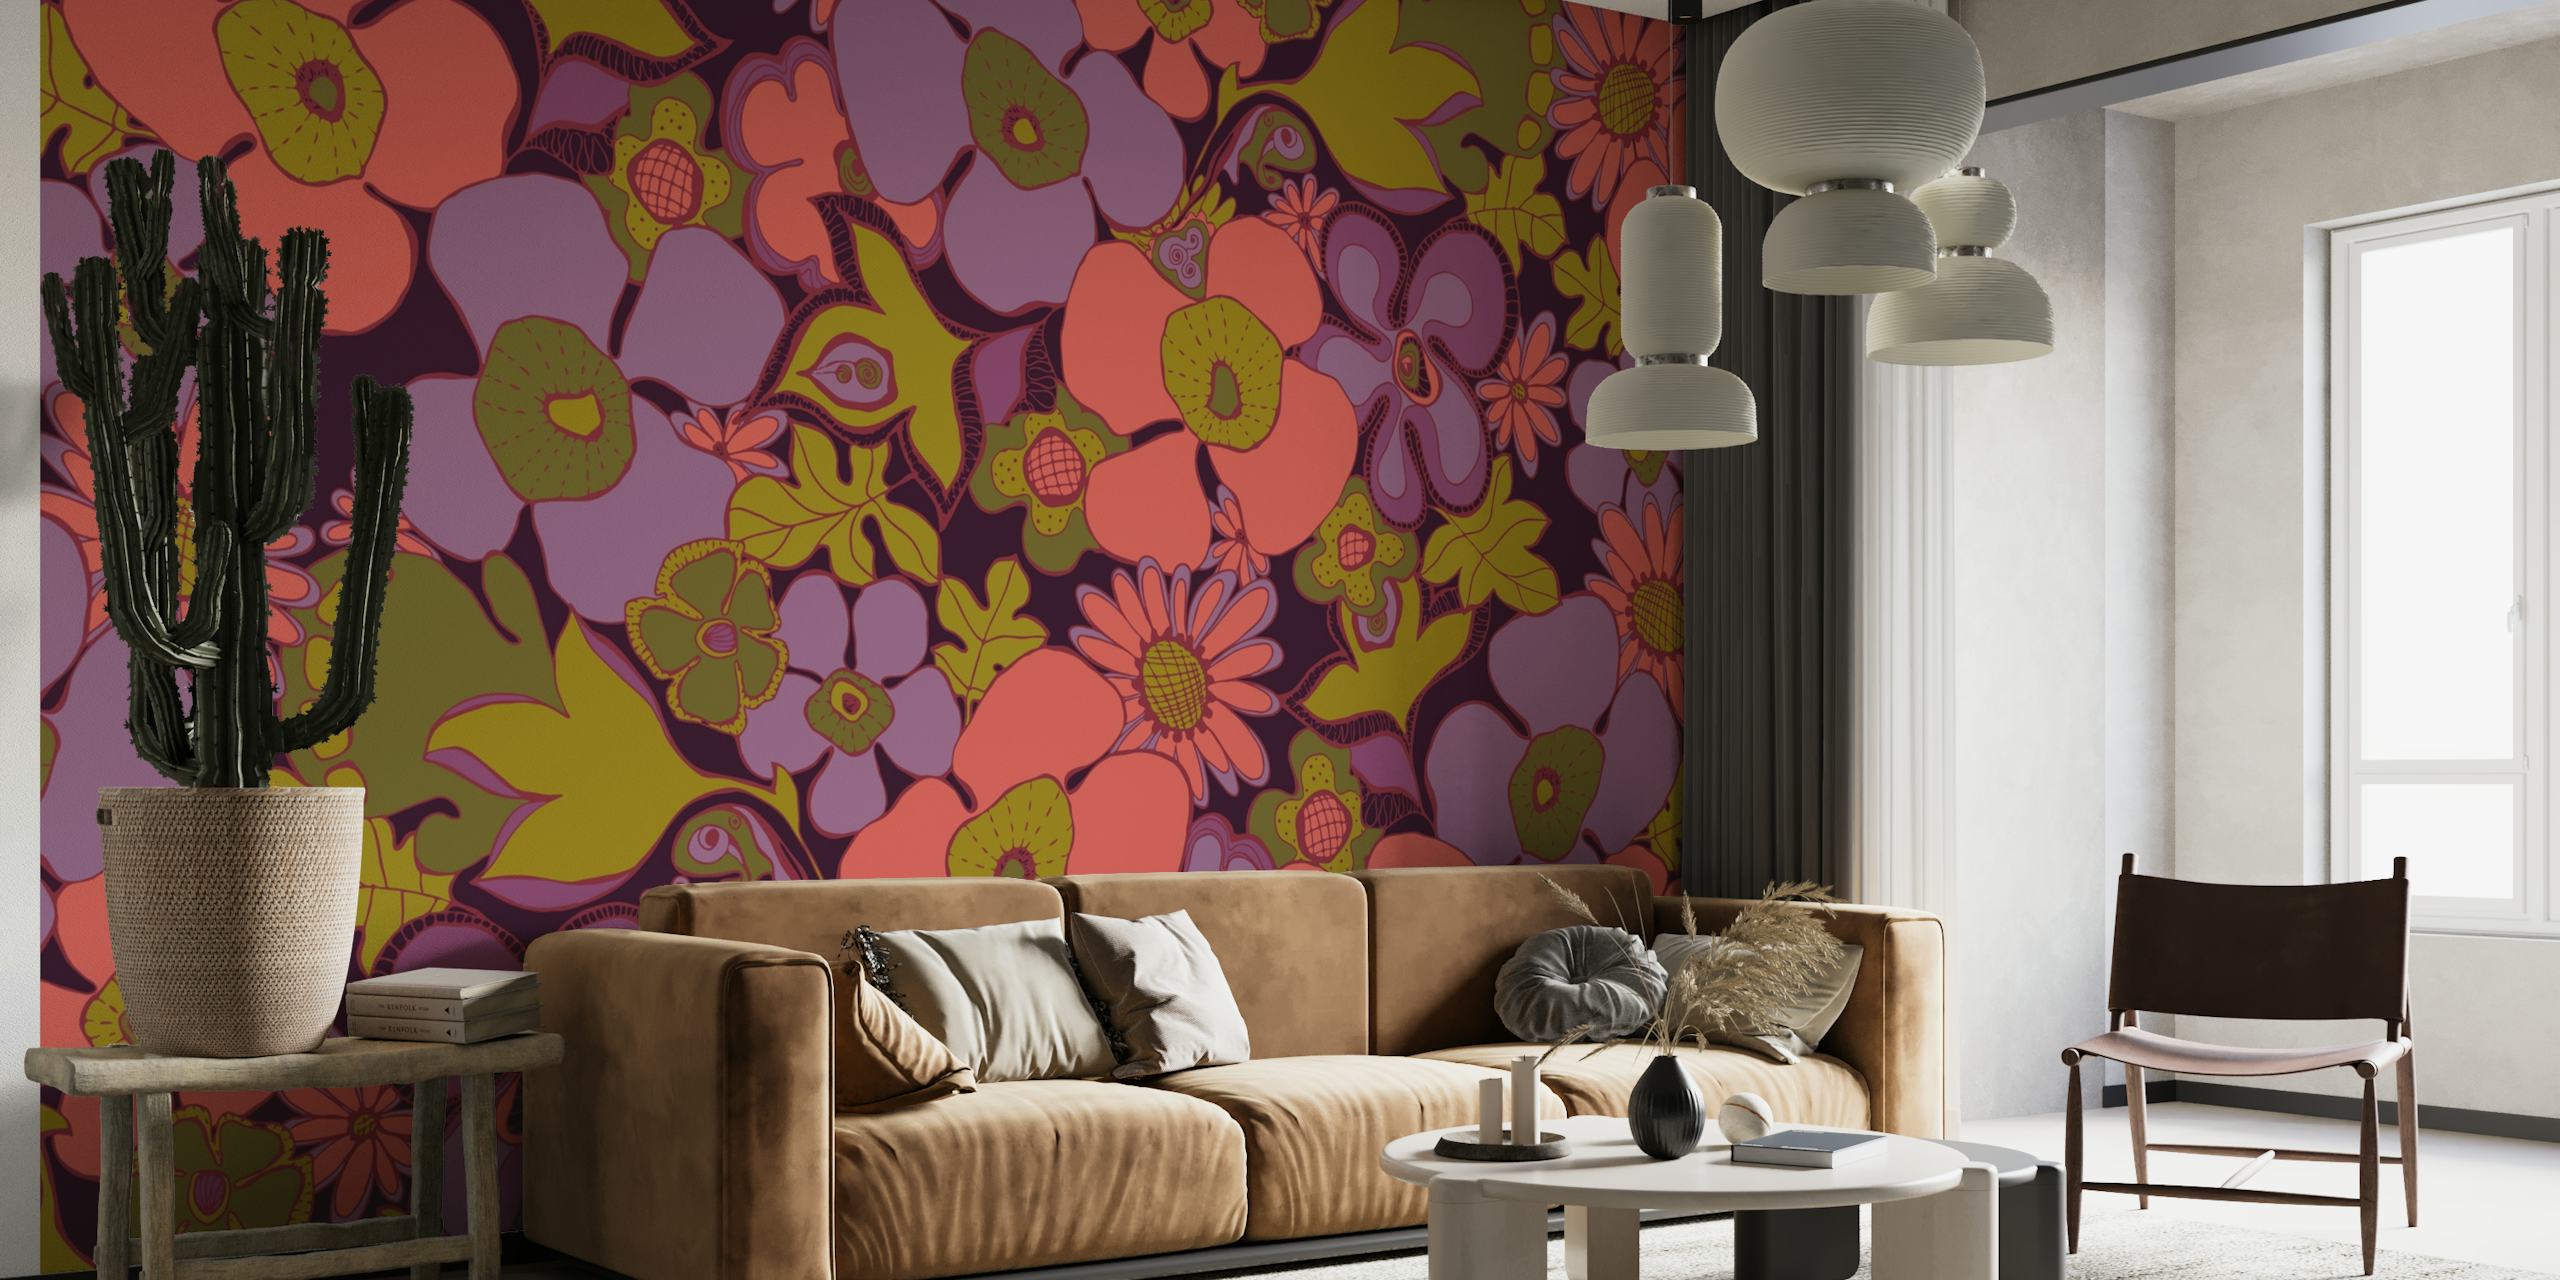 Mural de parede Floral Doodles em tons de oliva e roxo